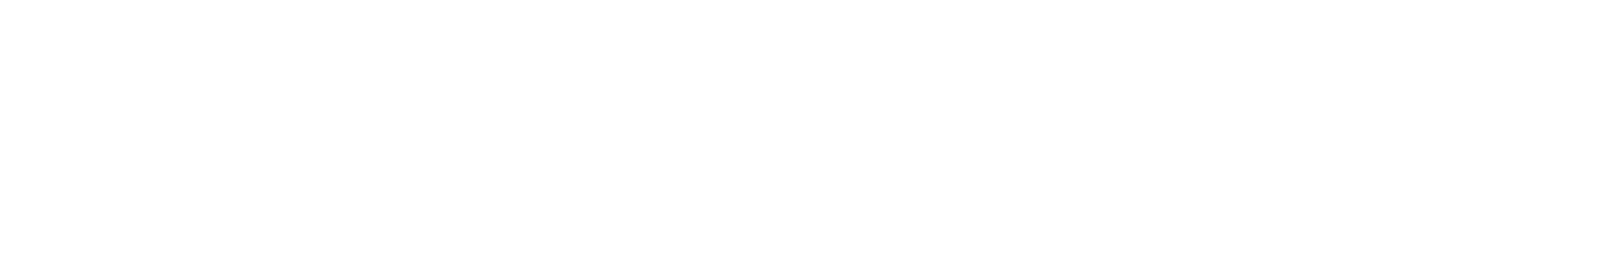 Adwokat Monika Stadnicka-Ożga